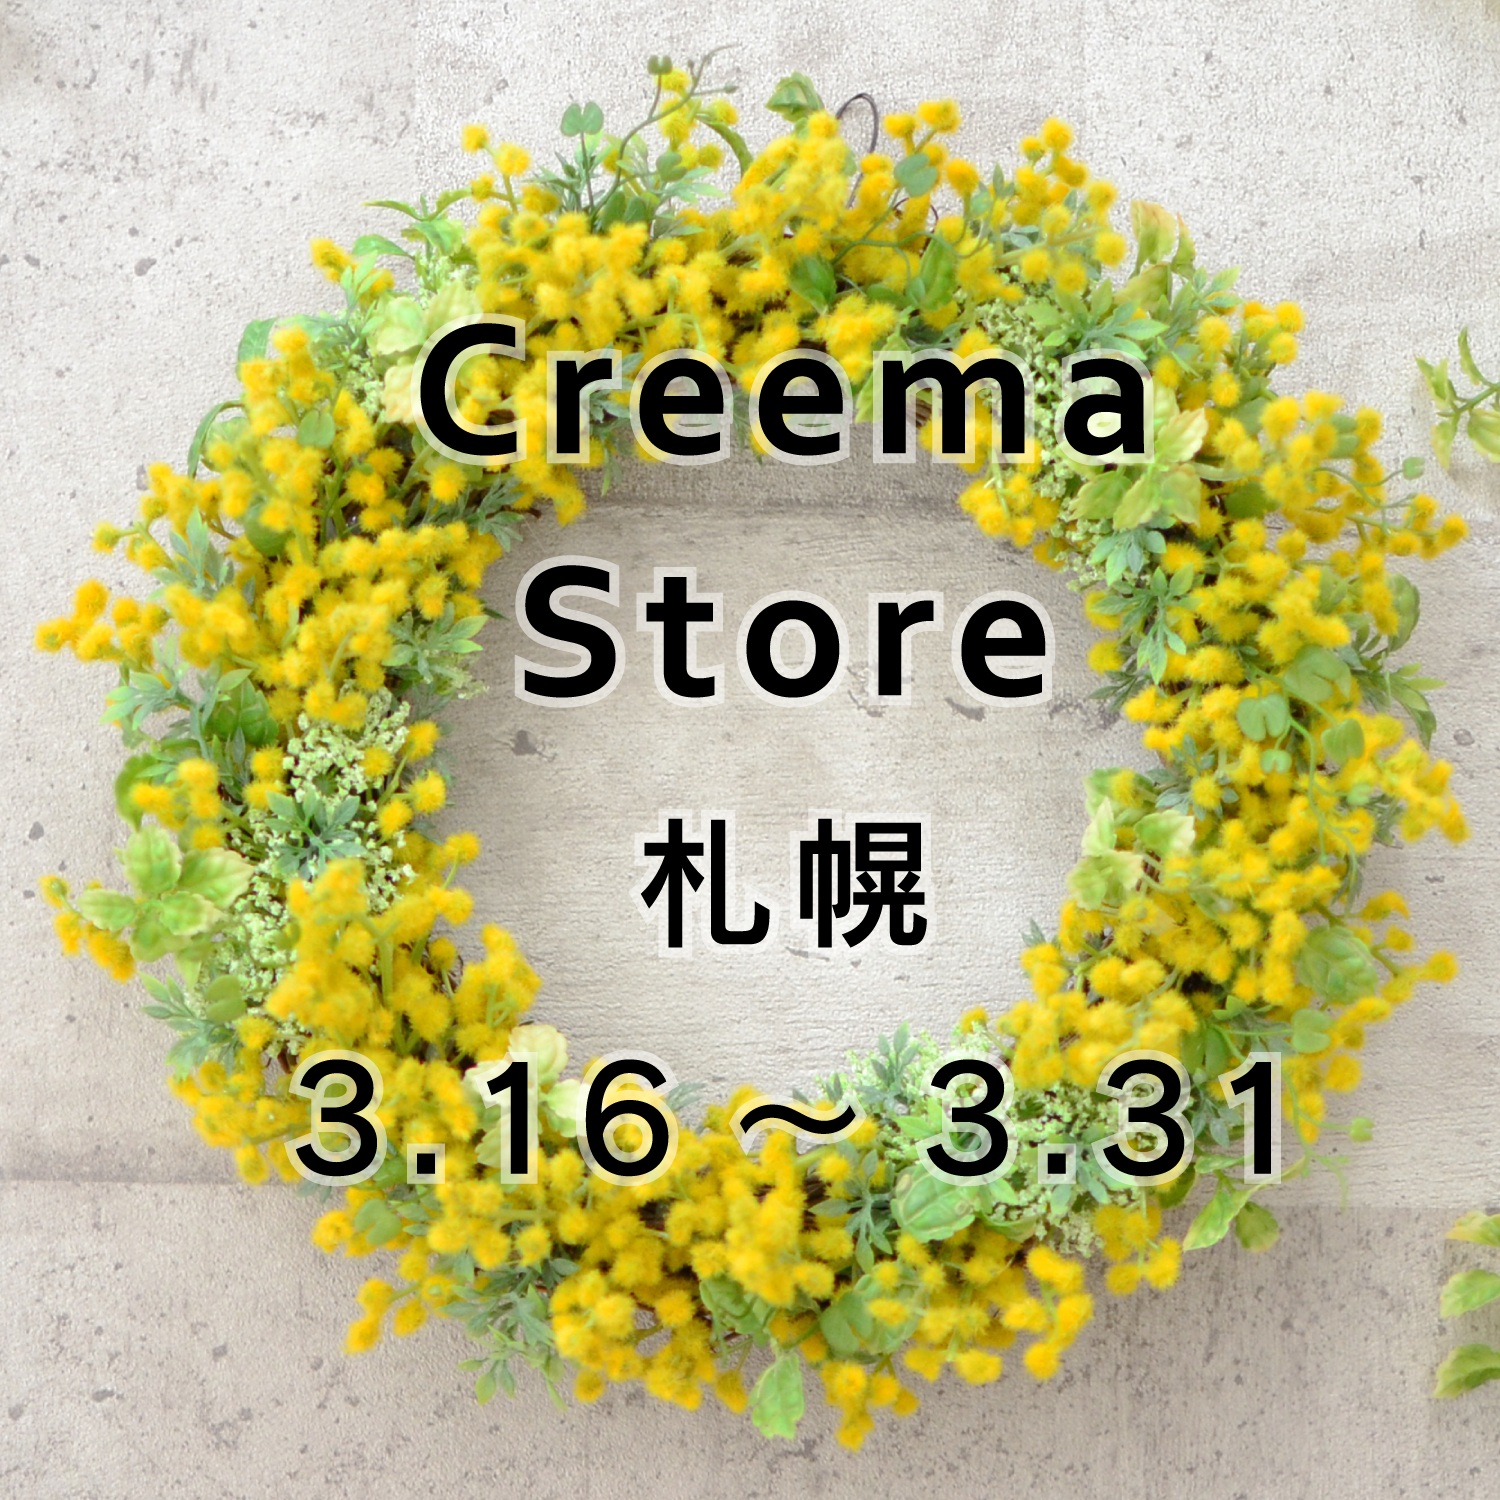 『Creema Store札幌』出展のお知らせ